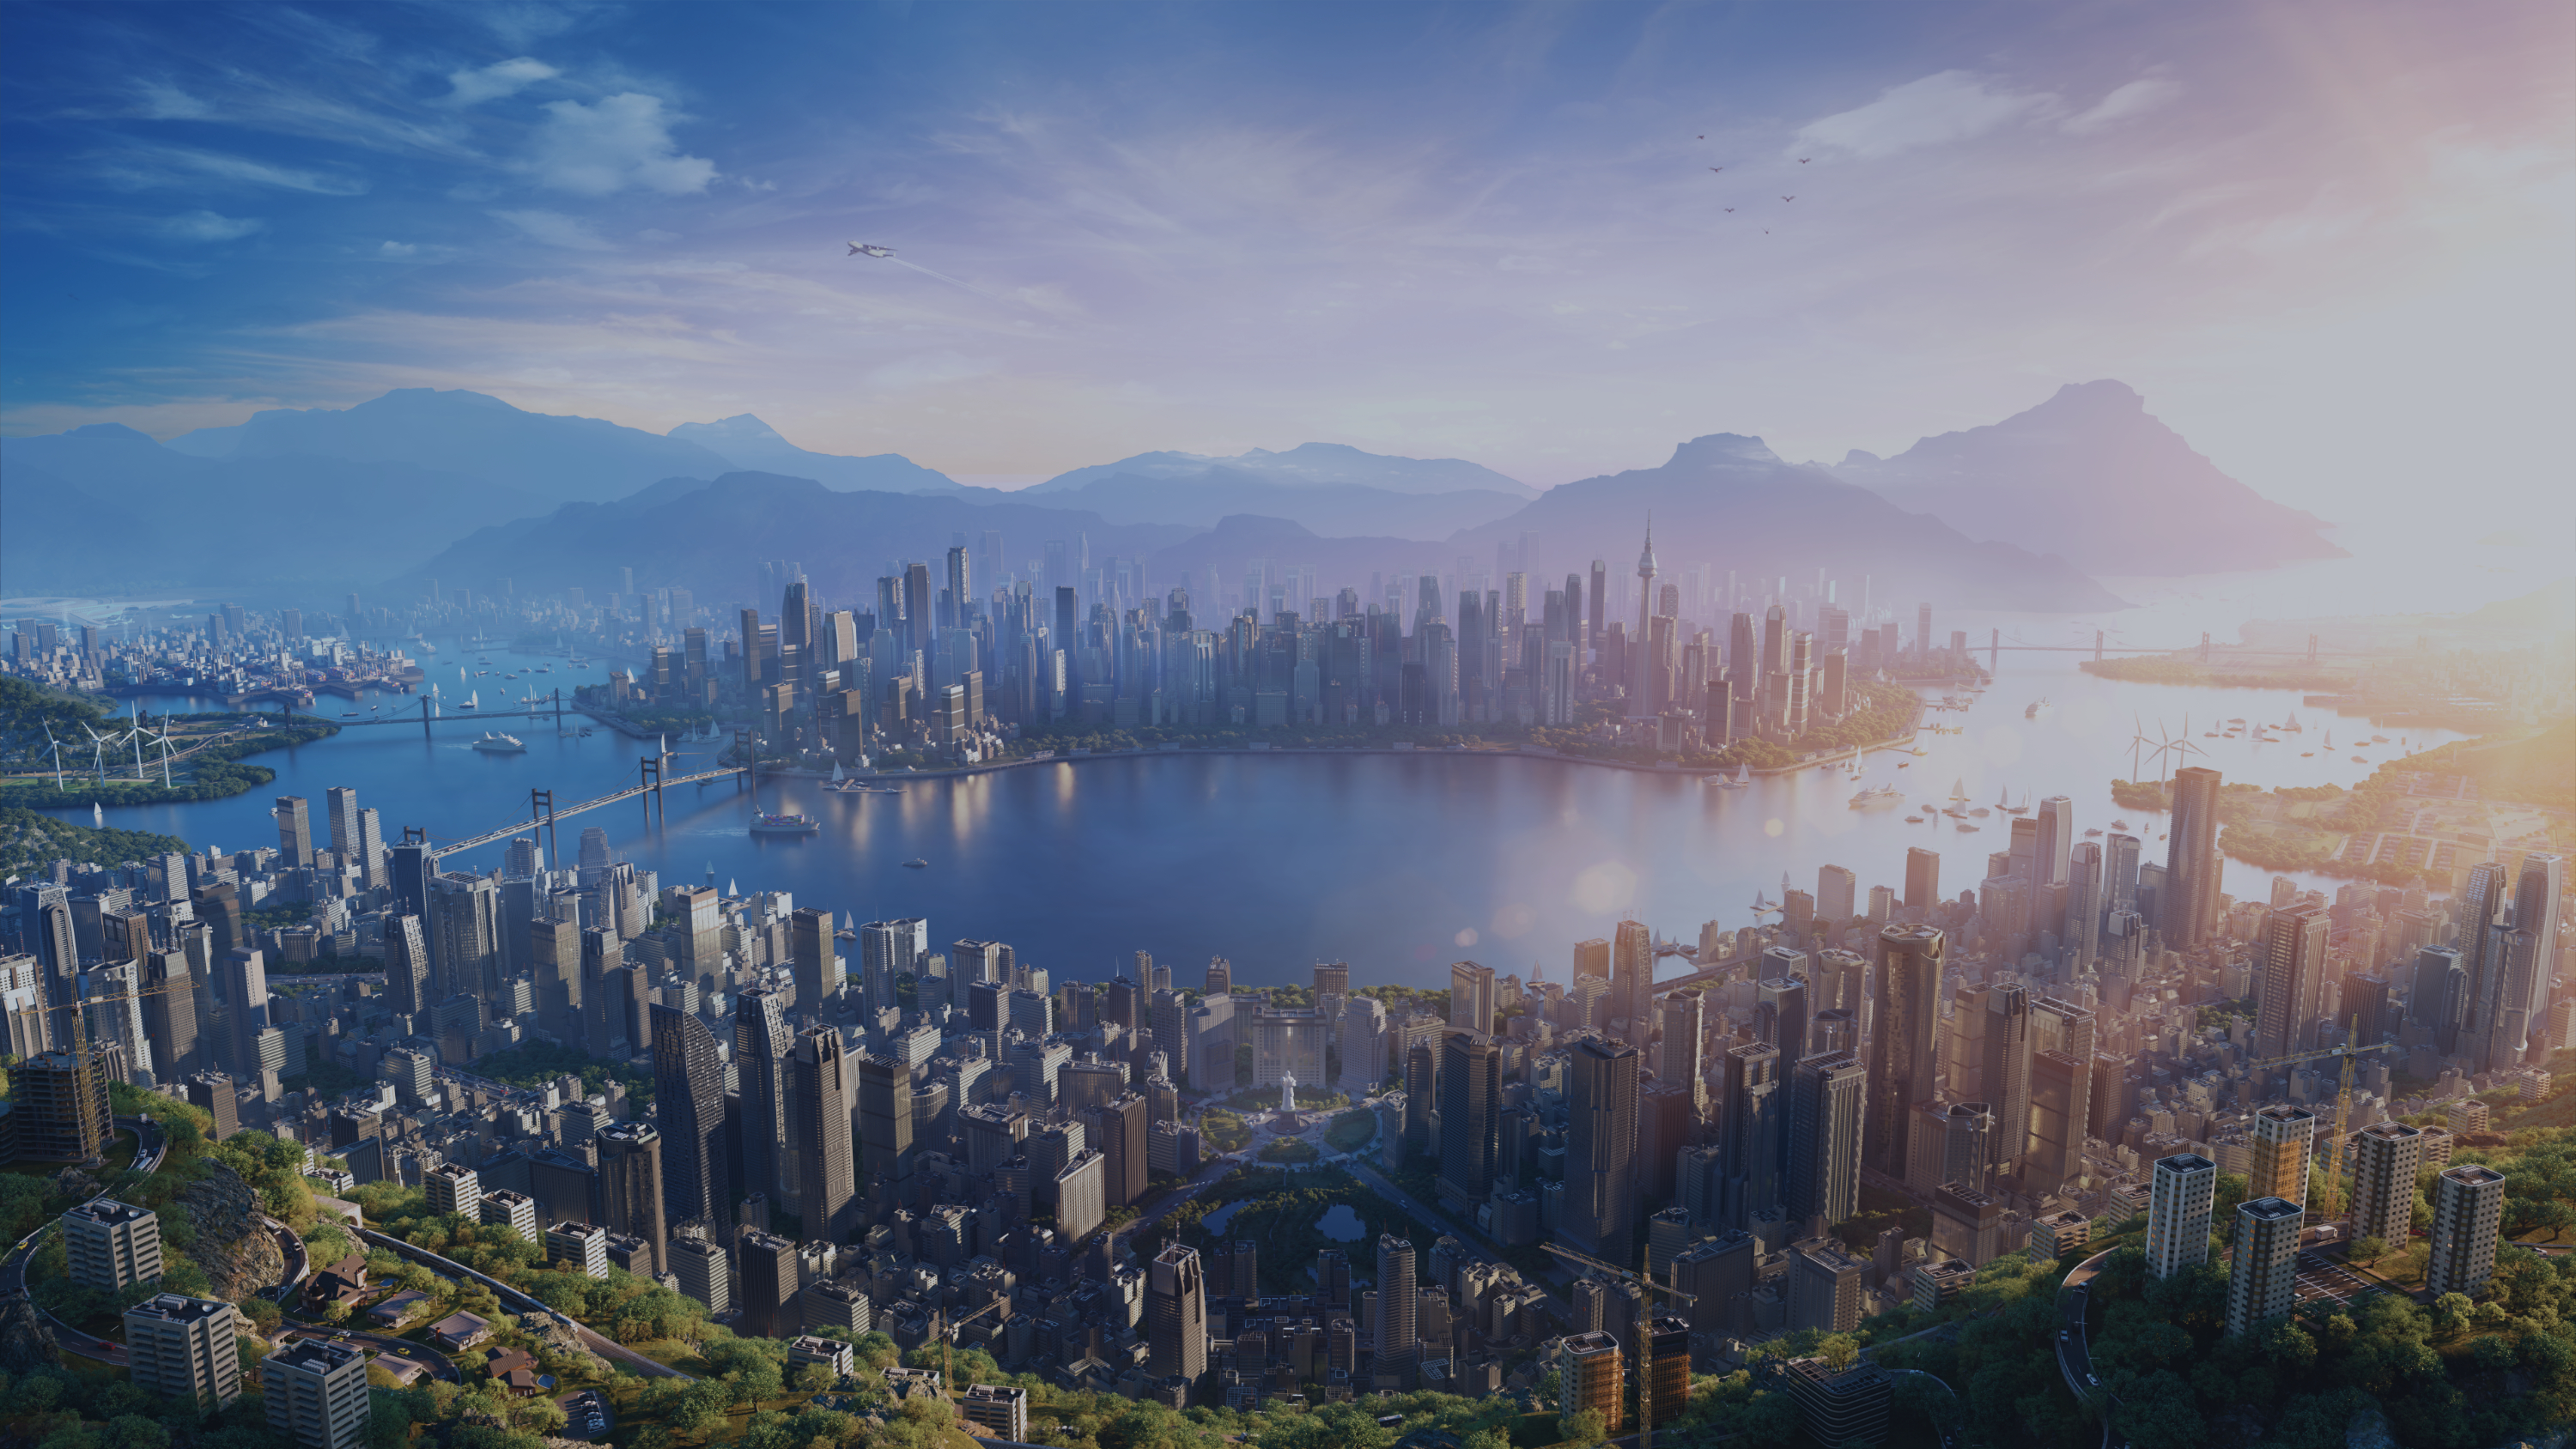 Cities: Skylines 2 só chega à PS5 e Xbox Series X em 2024